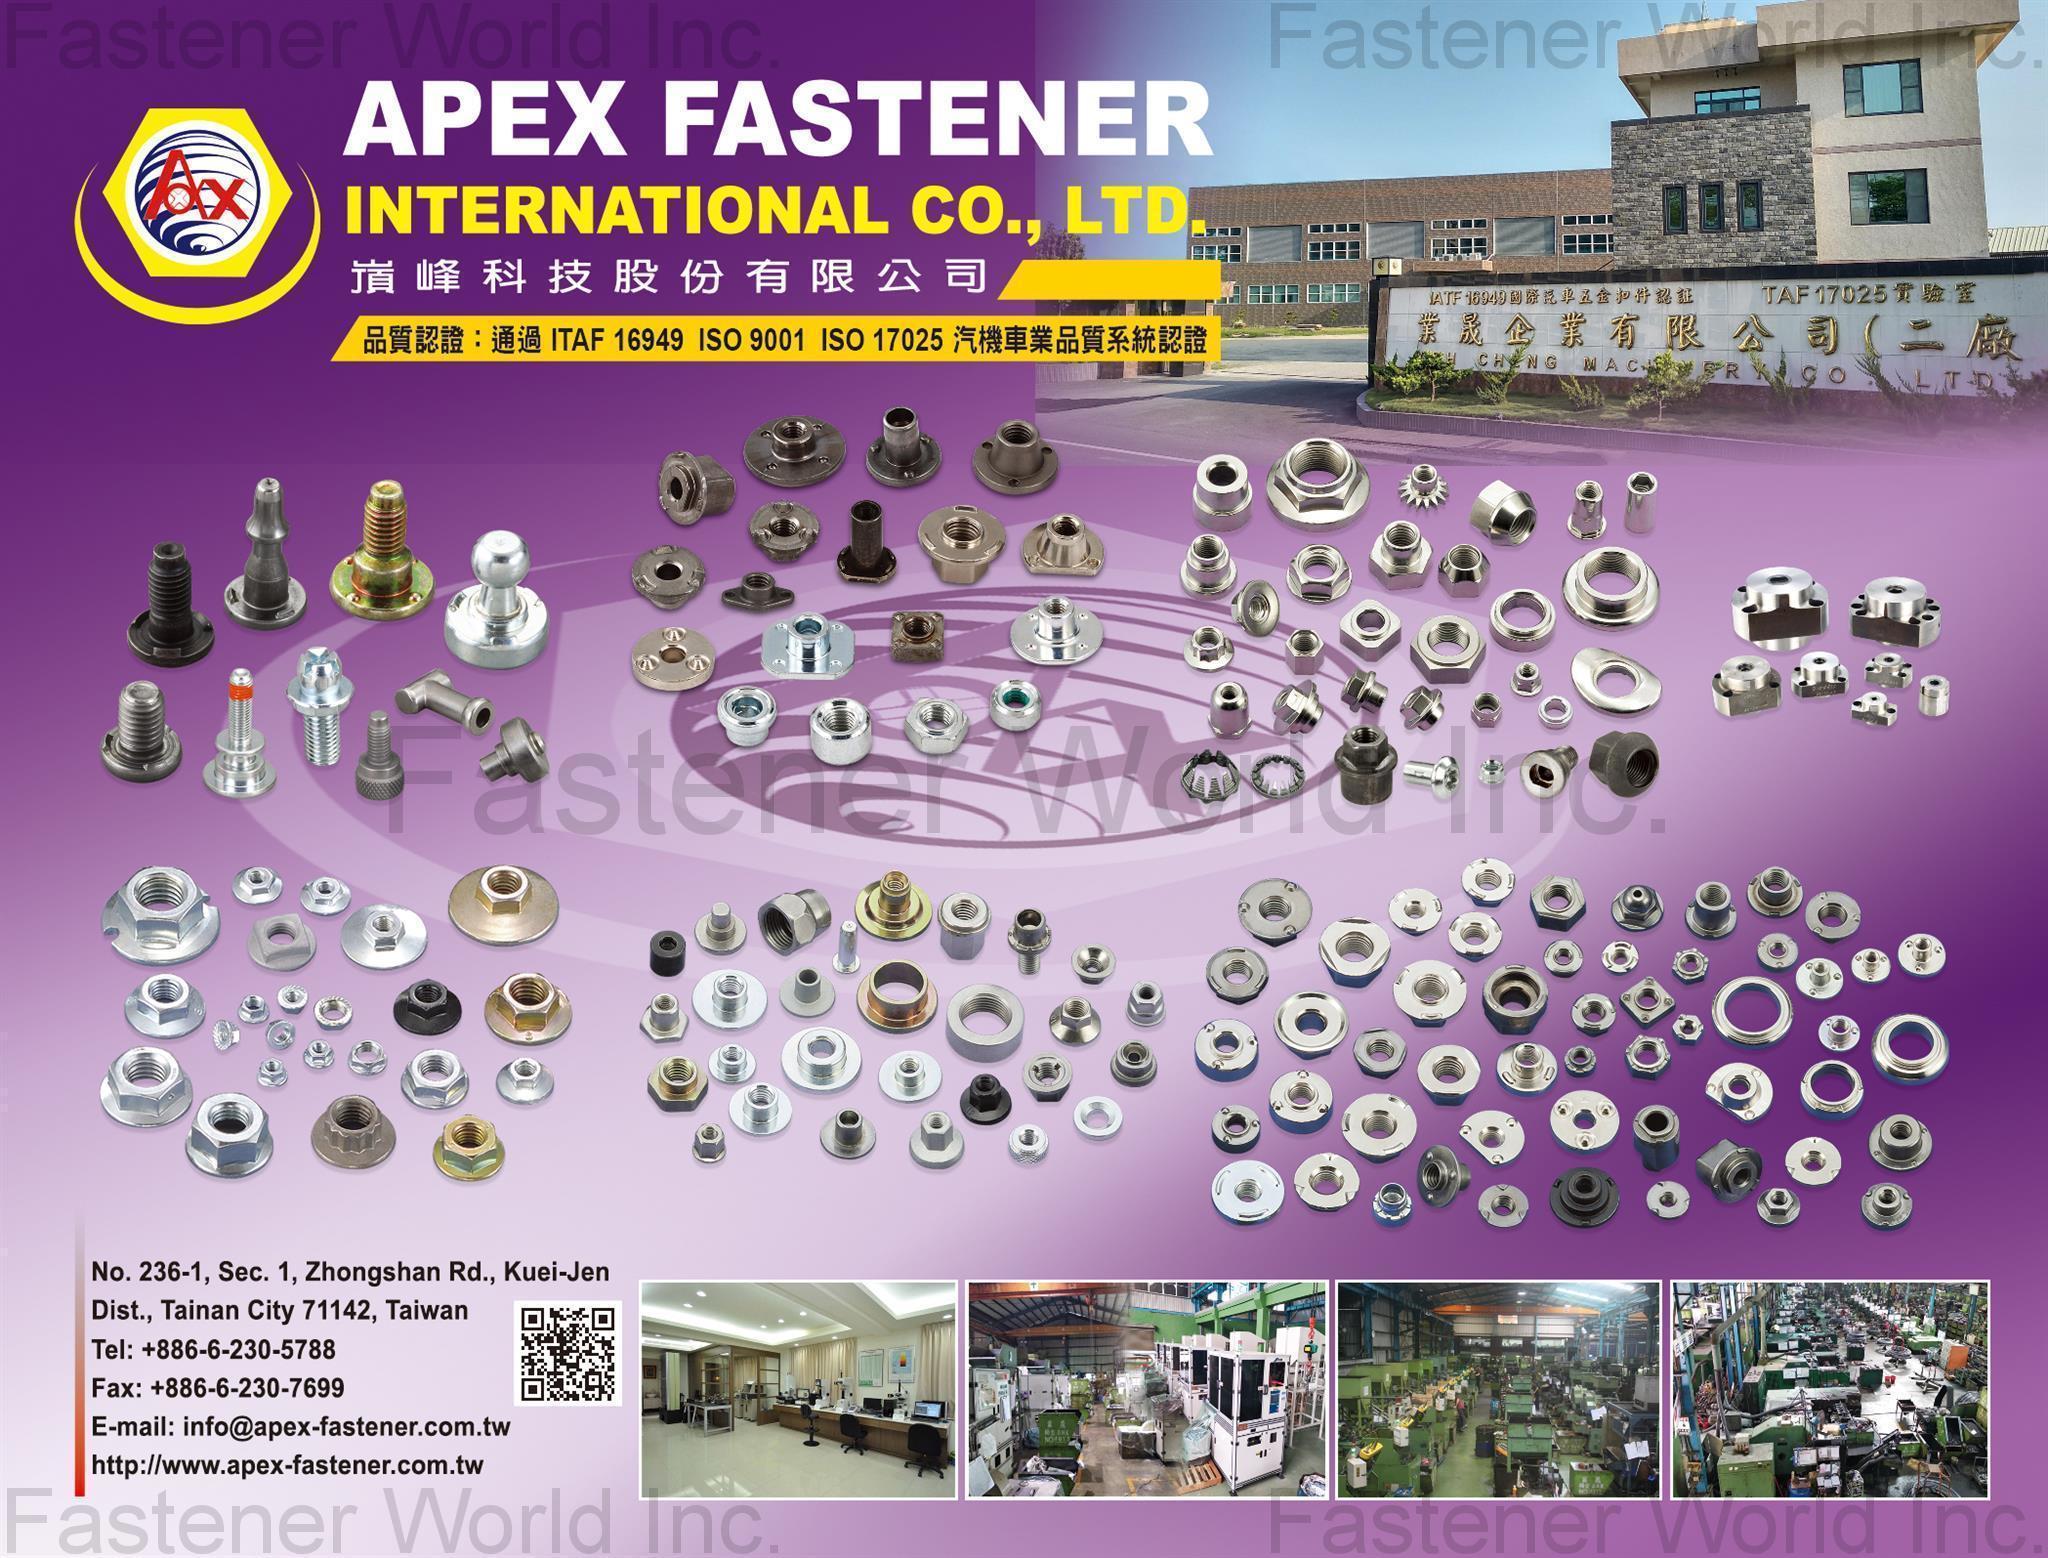 APEX FASTENER INTERNATIONAL CO., LTD. , Weld Nut, Flange Nut, Lock Nut, Nylon Insert Nut, Stainless Nut, Special Nut, Special Fasteners, Sleeve Nut, Mold, Punch , Weld Nuts